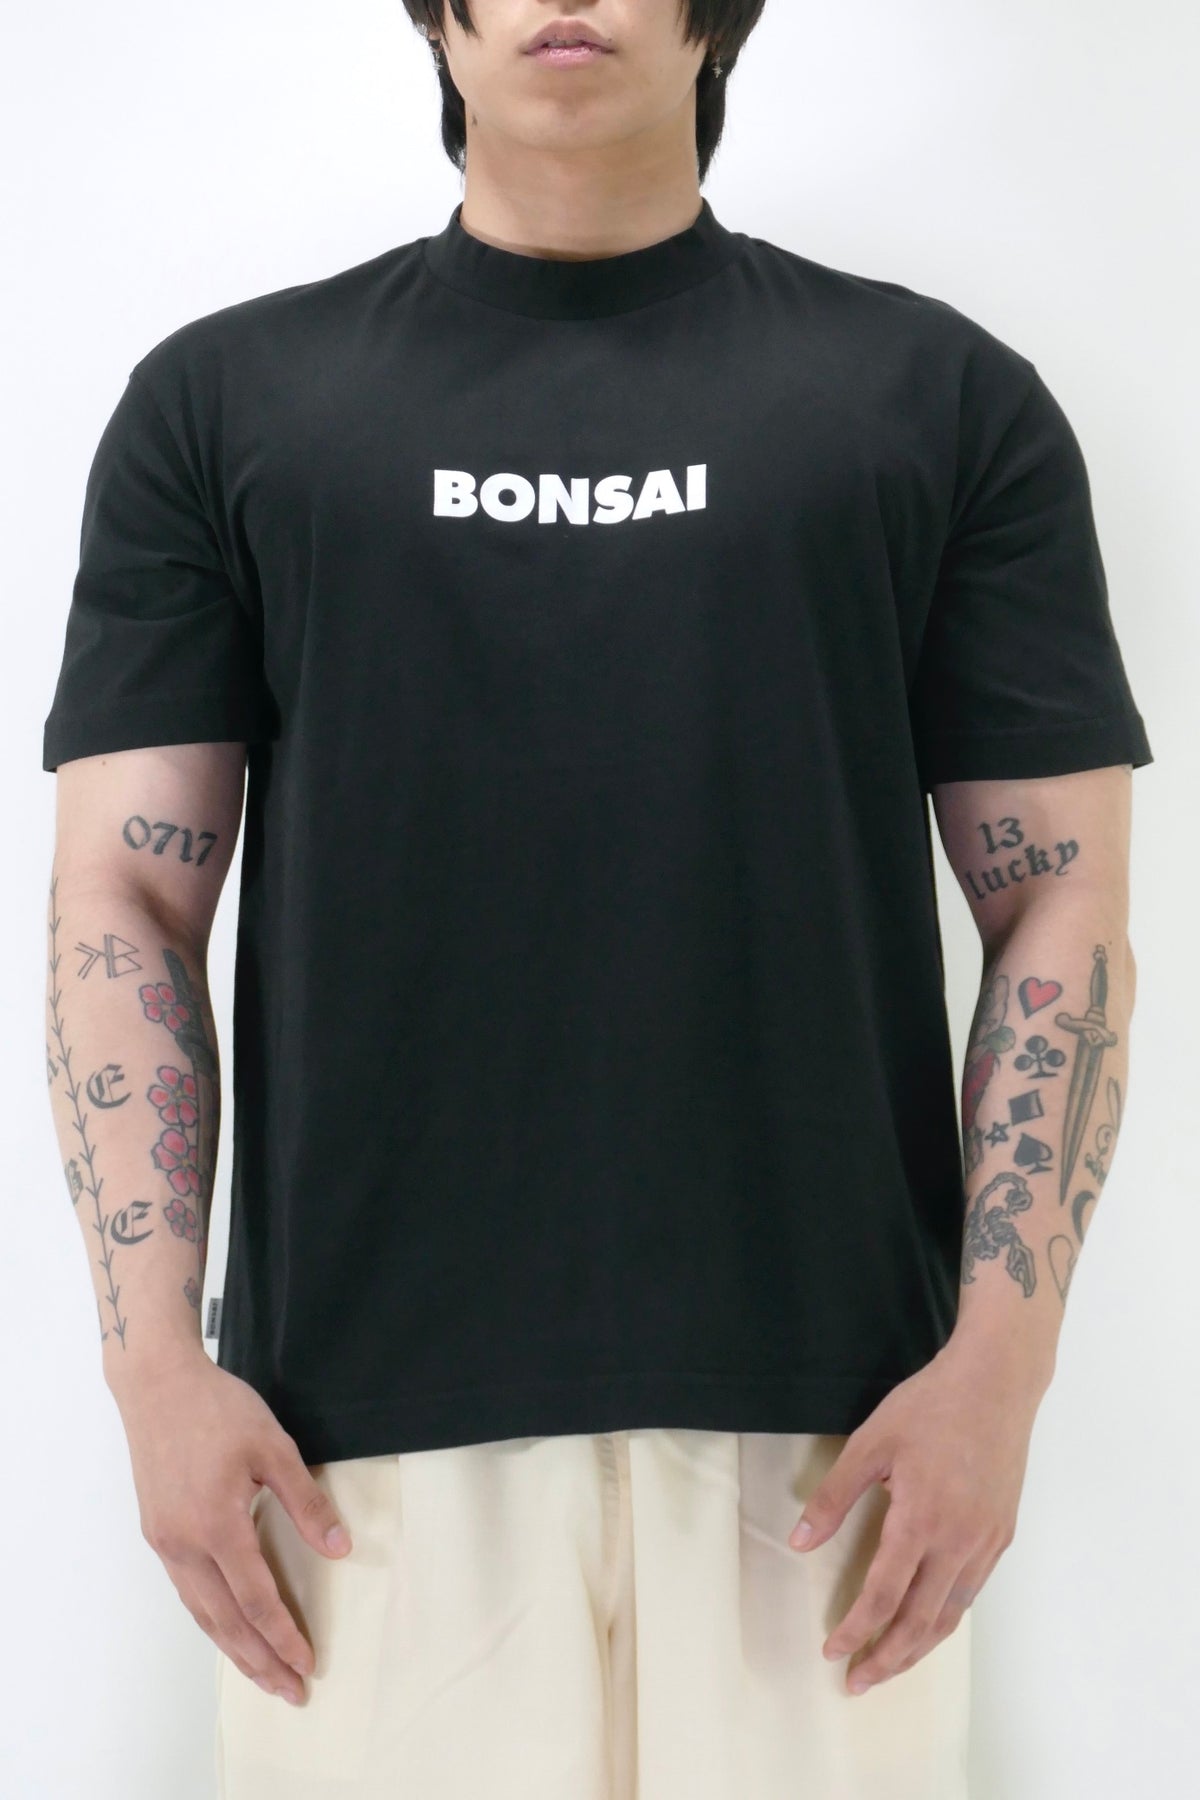 Bonsai Logo Tee - Black